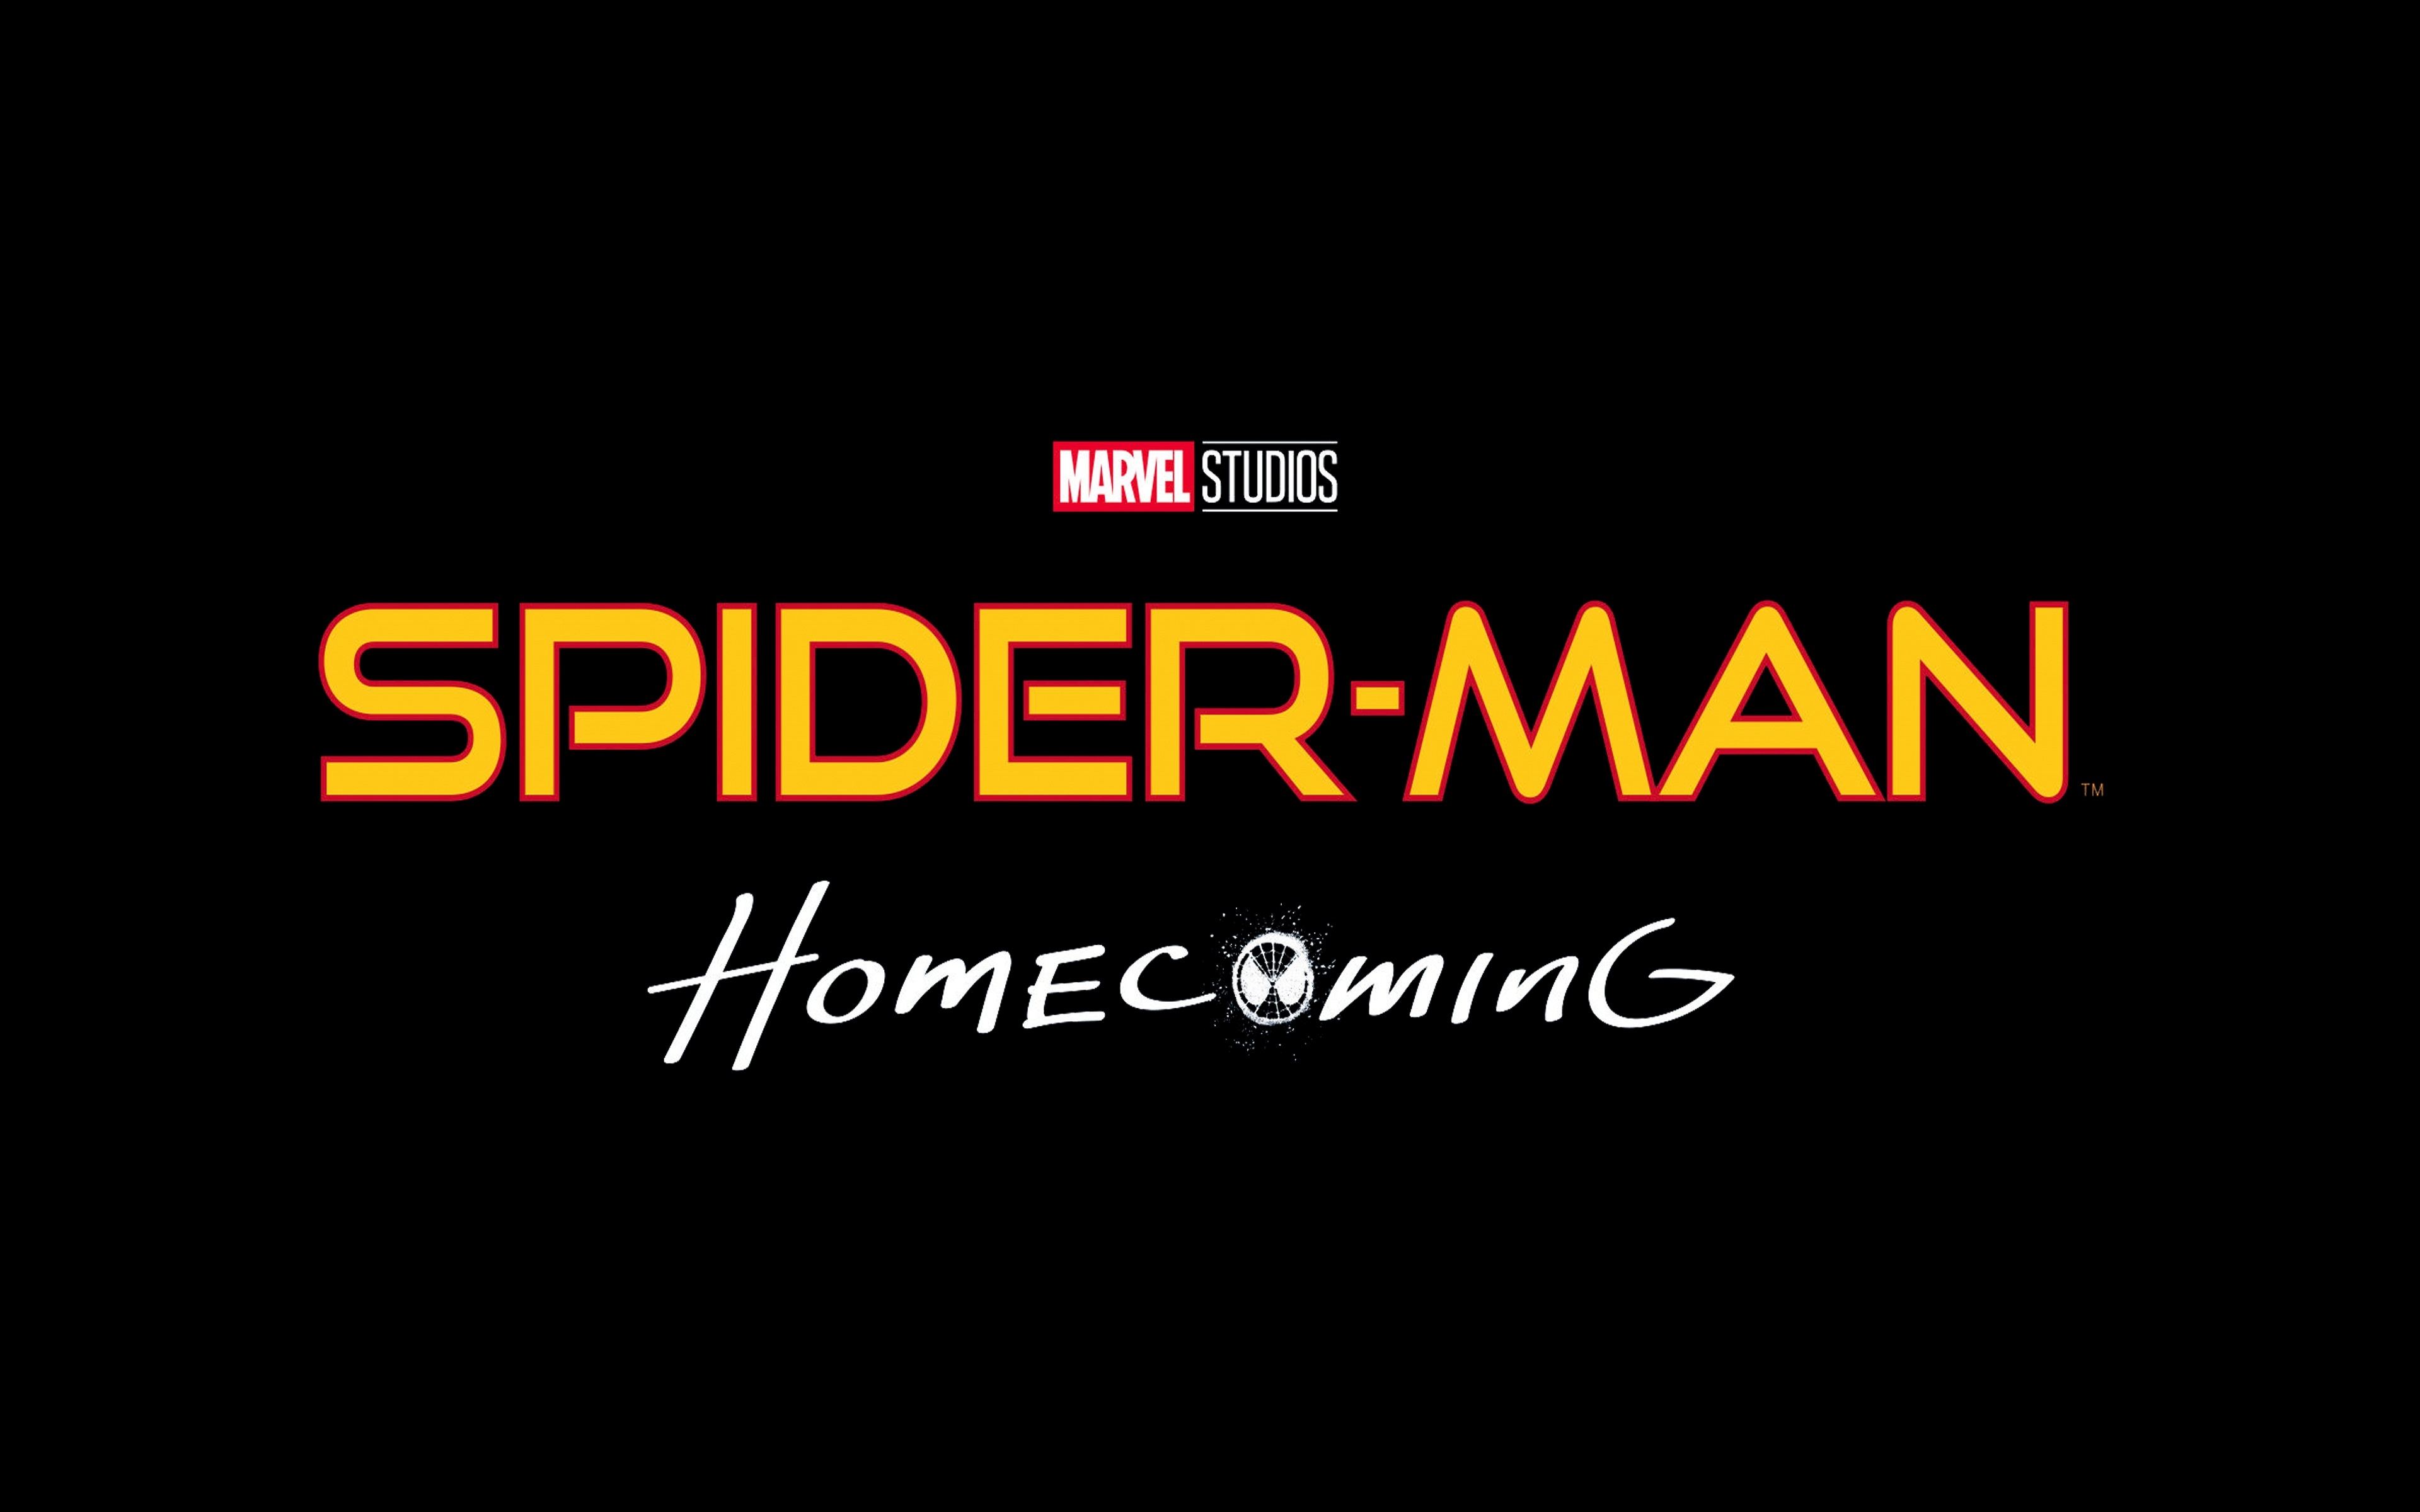 Spiderman Homecoming 2017 for 3840 x 2400 4K Retina Display resolution